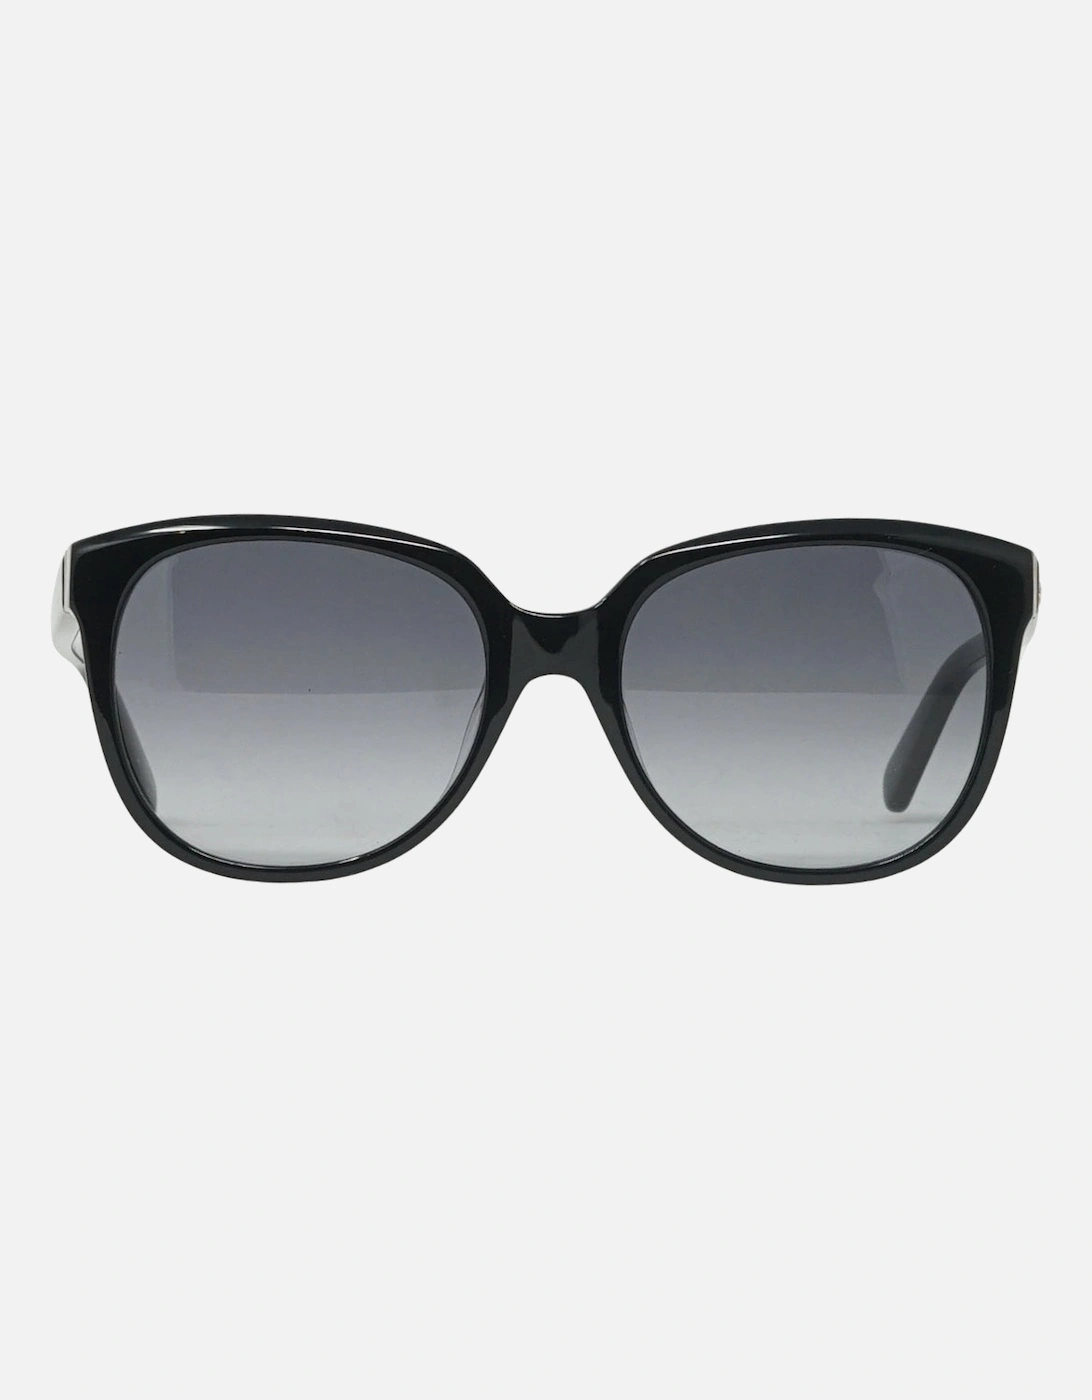 Bayleigh 0807 00 Black Sunglasses, 4 of 3